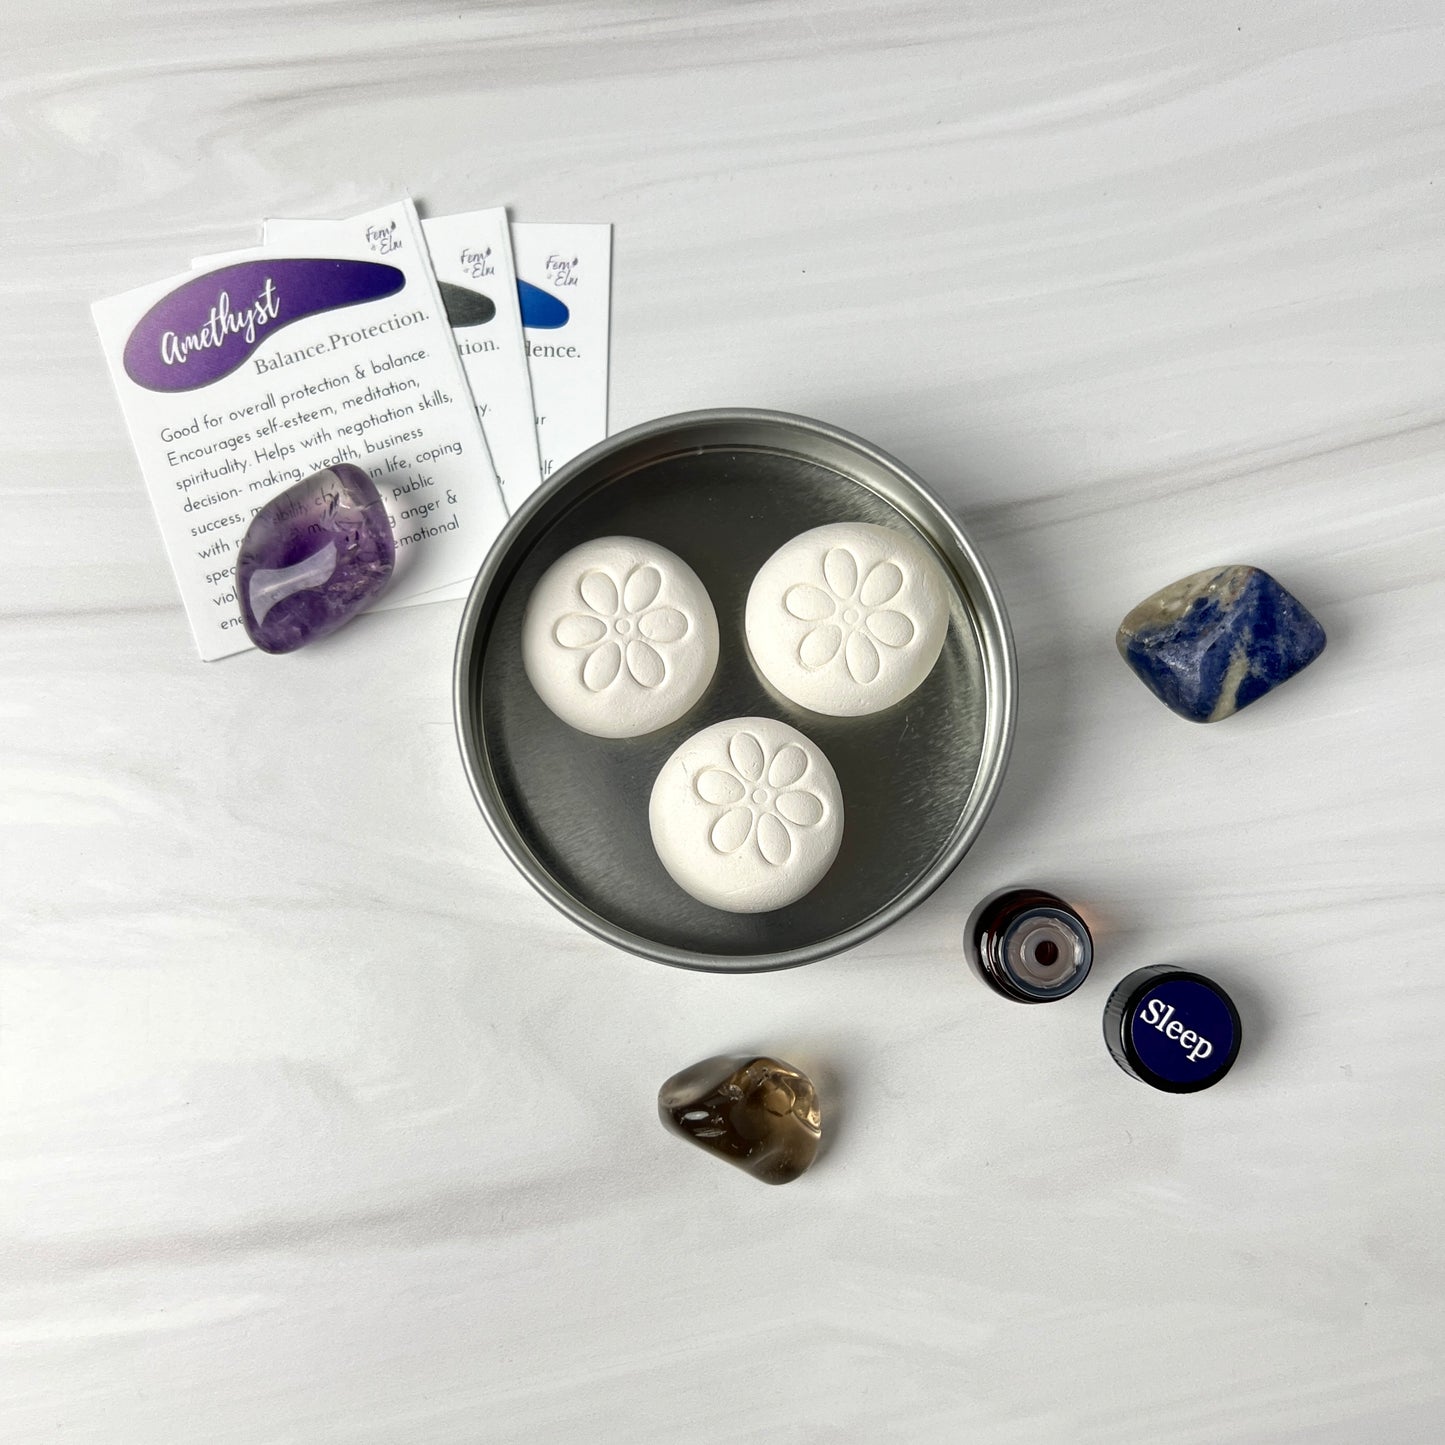 Sleep Essential Oil Diffuser & Crystals Kit